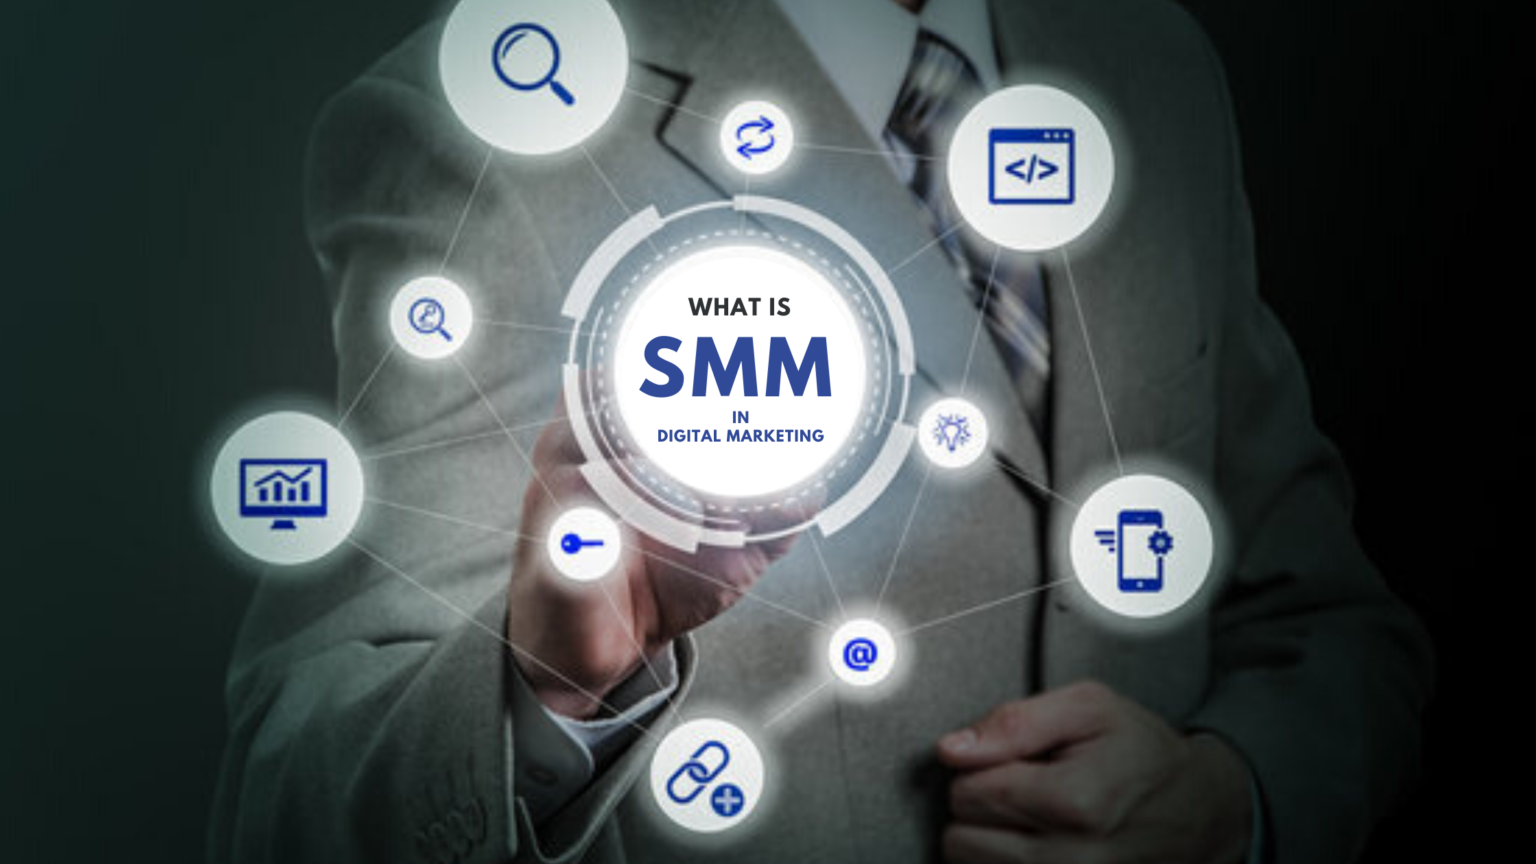 What Is SMM (Social Media Marketing) In Digital Marketing